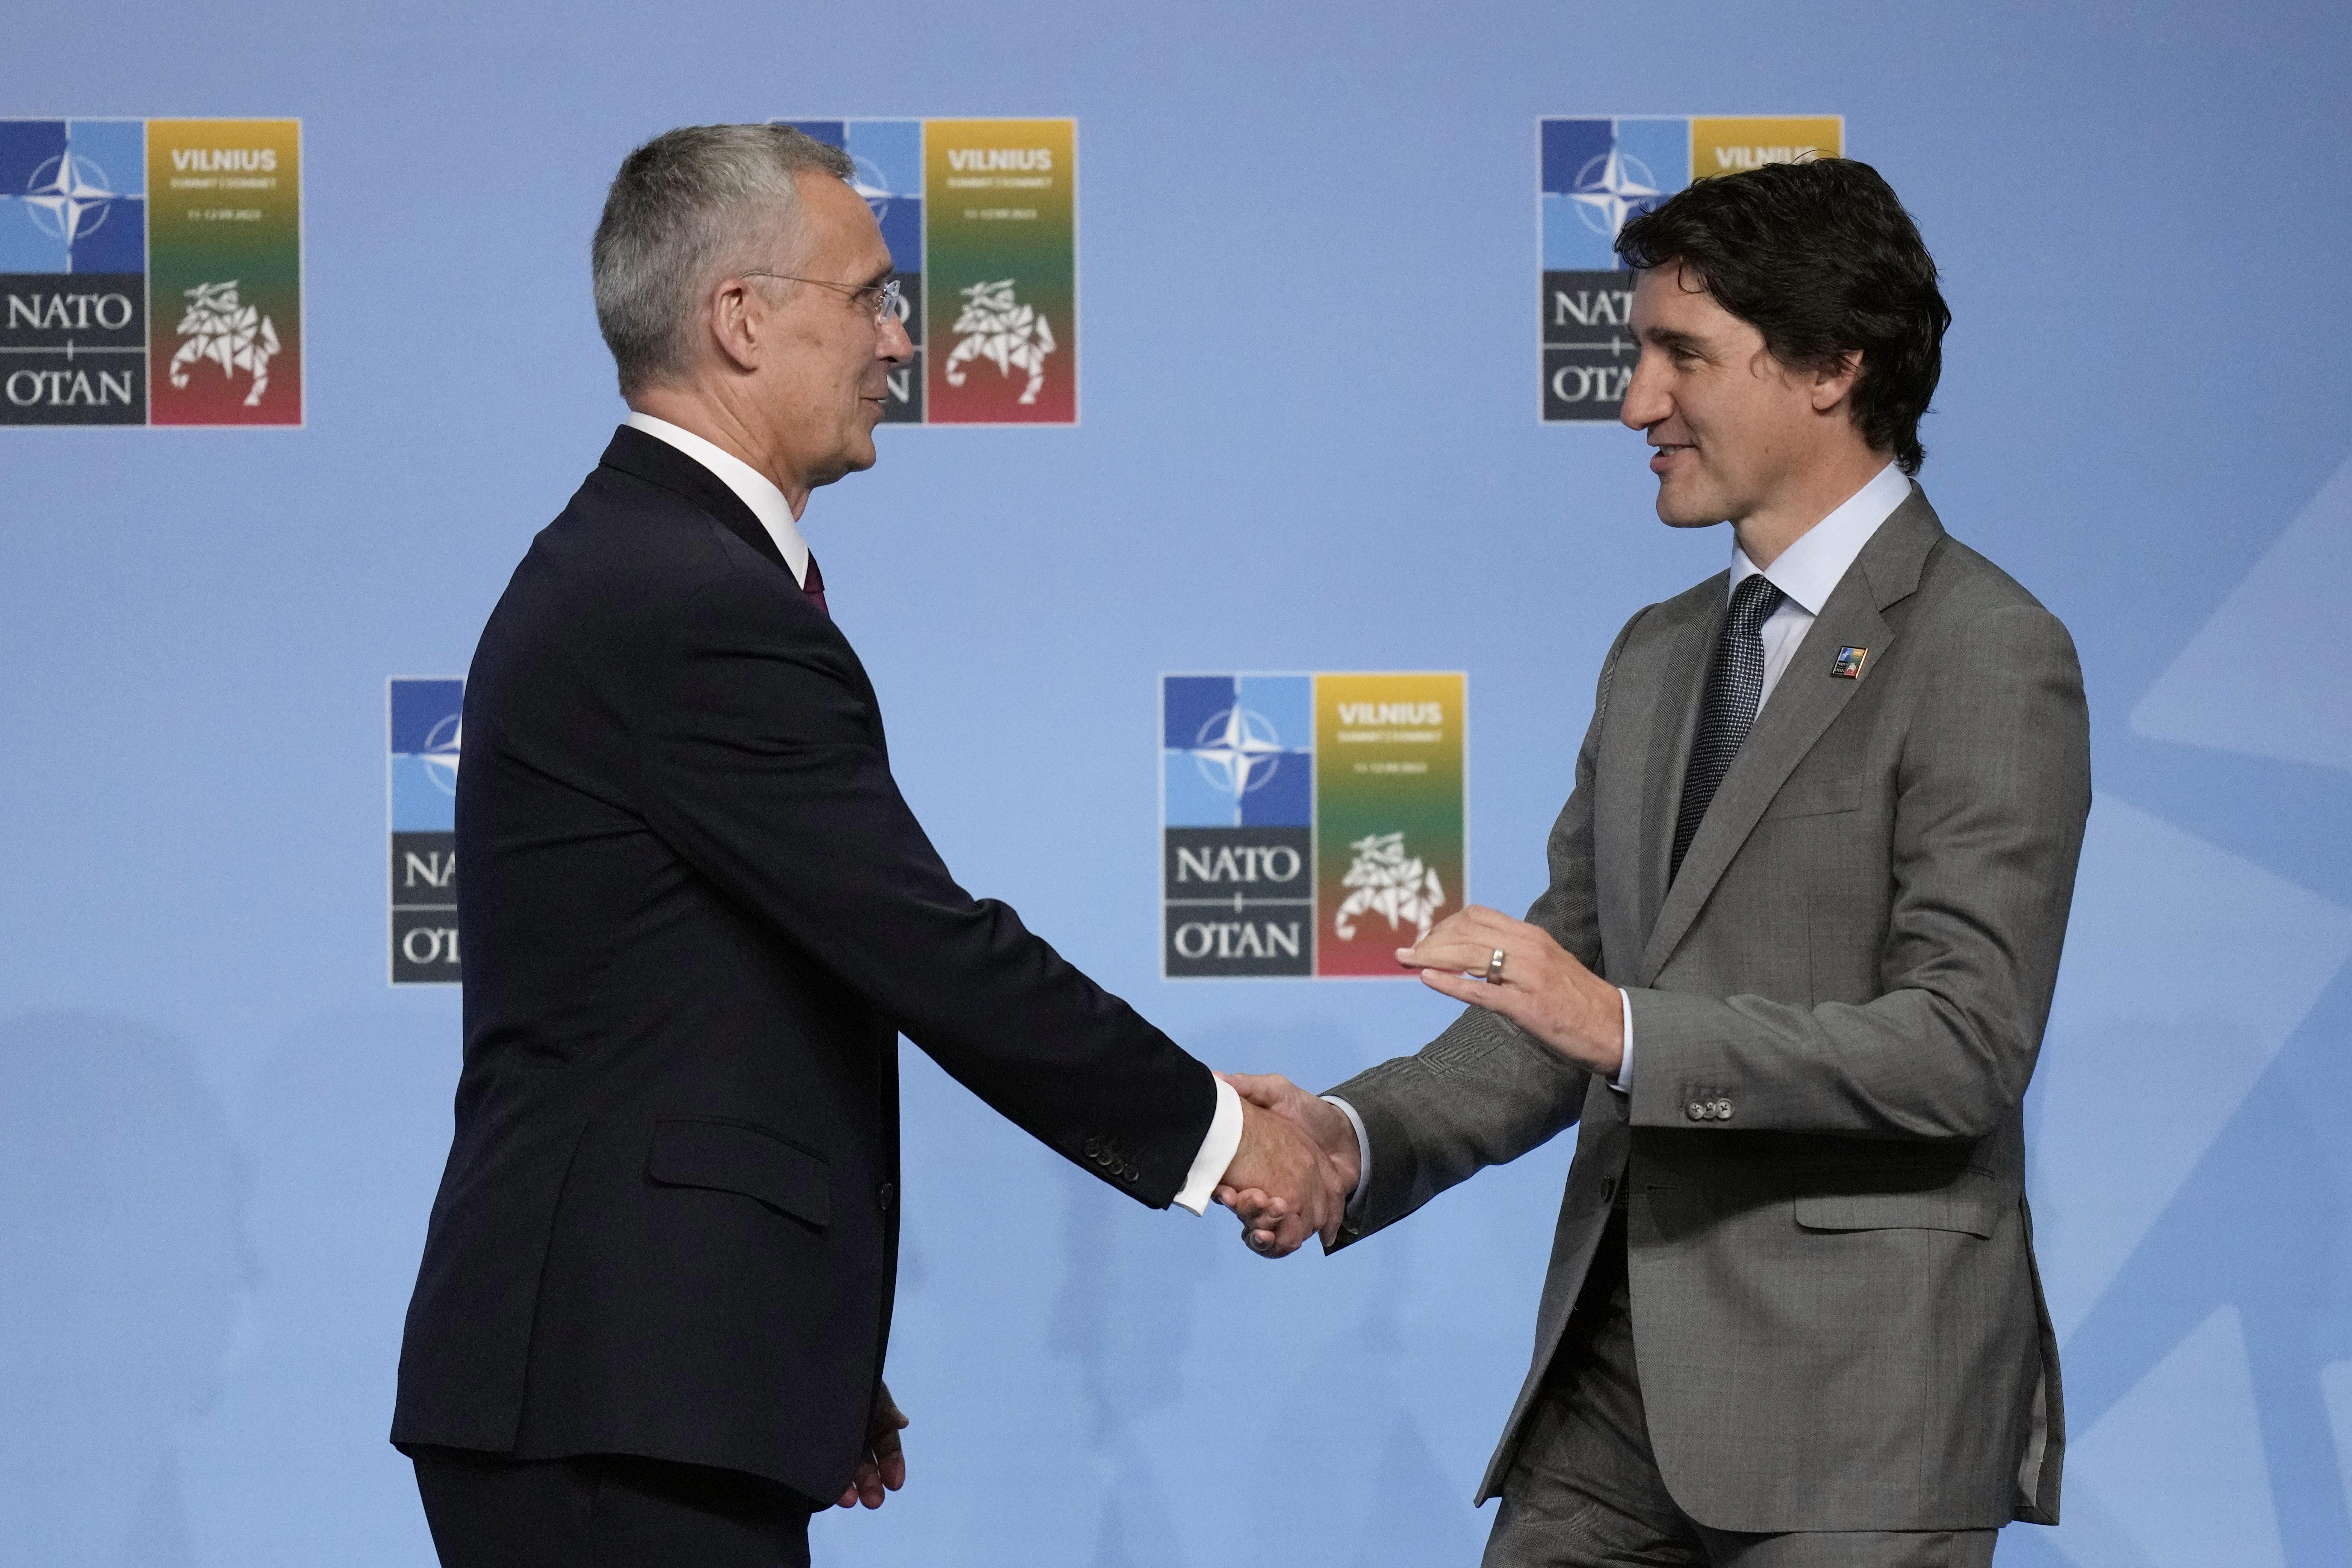 NATO chief Stoltenberg visiting Ottawa, set to meet Trudeau